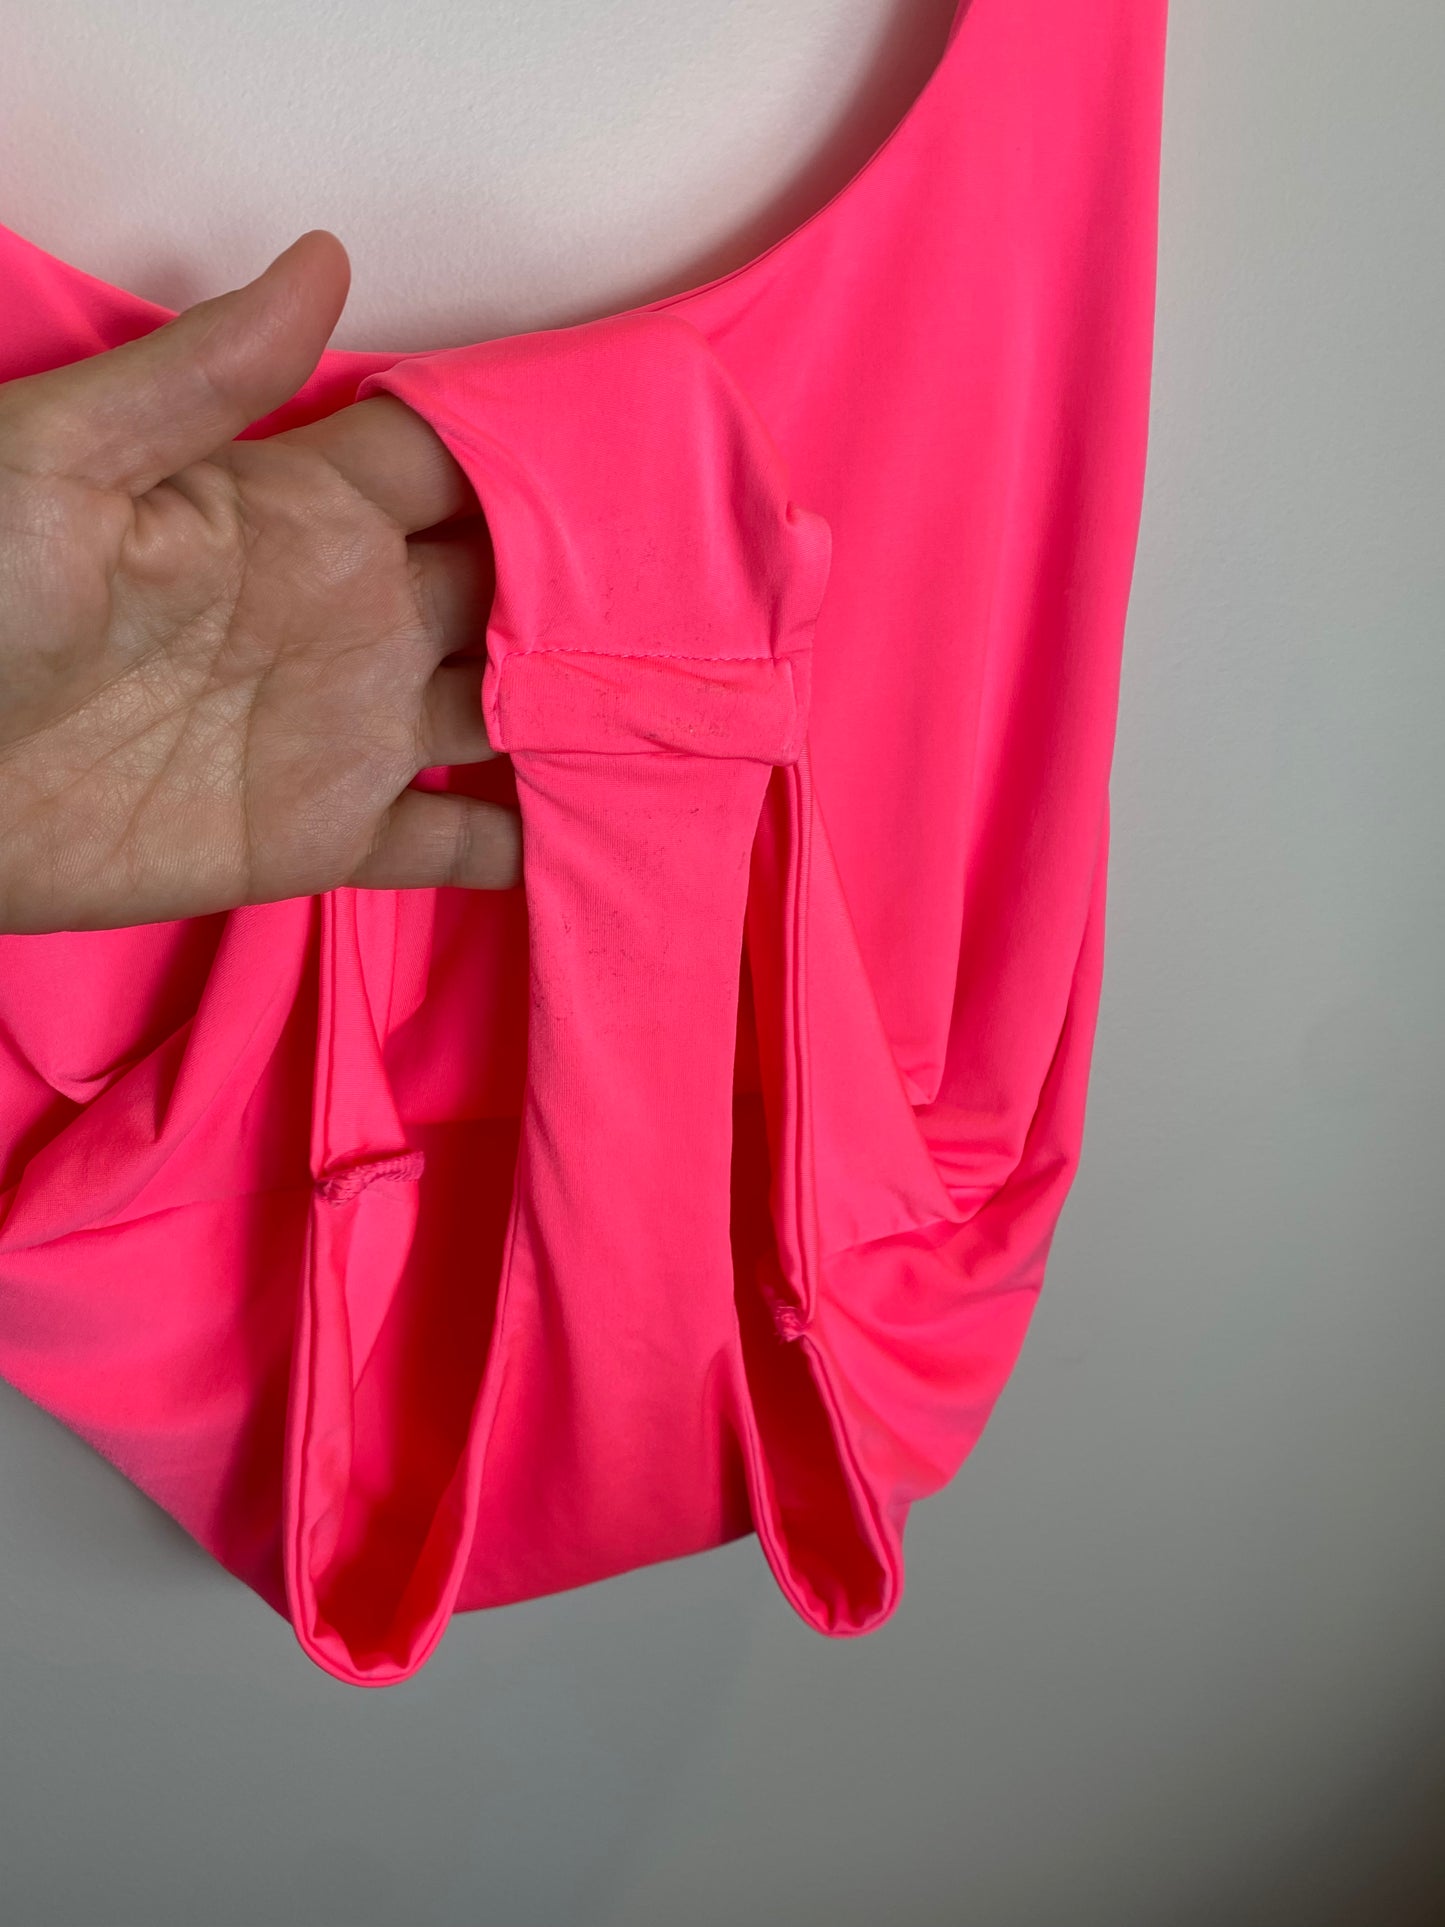 PRETTYLITTLETHING Hot Pink Neon Bodysuit